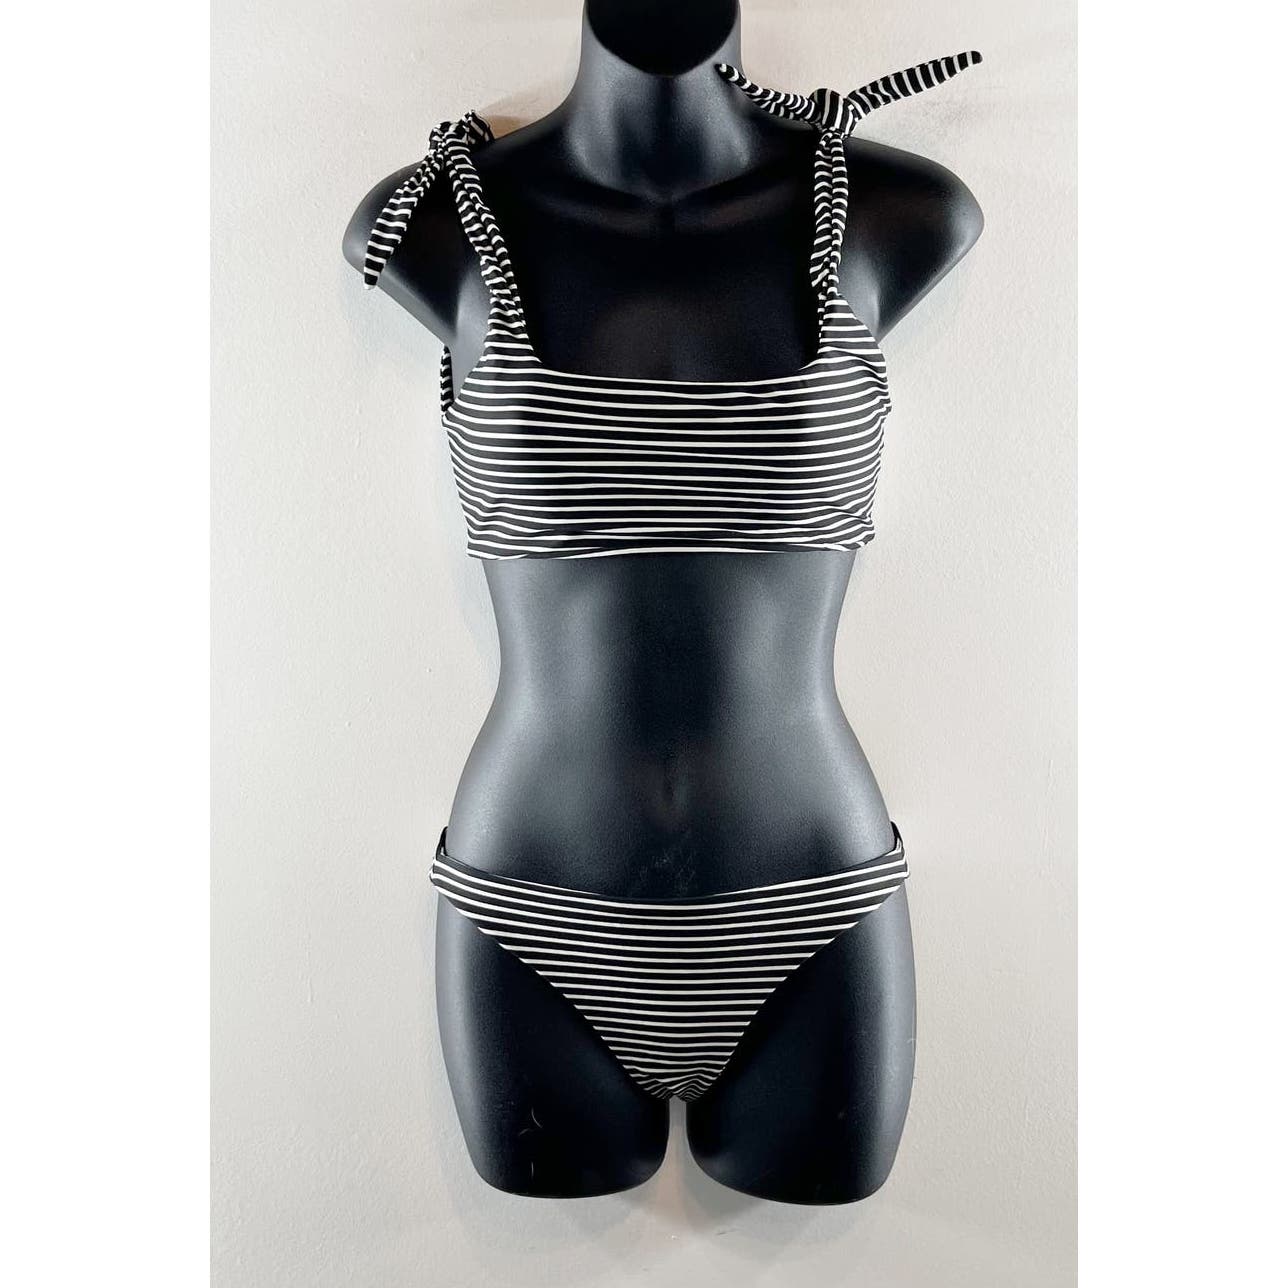 MIKOH Jamaica Bikini Top and Zuma Striped Bottoms Swimsuit Black White Medium